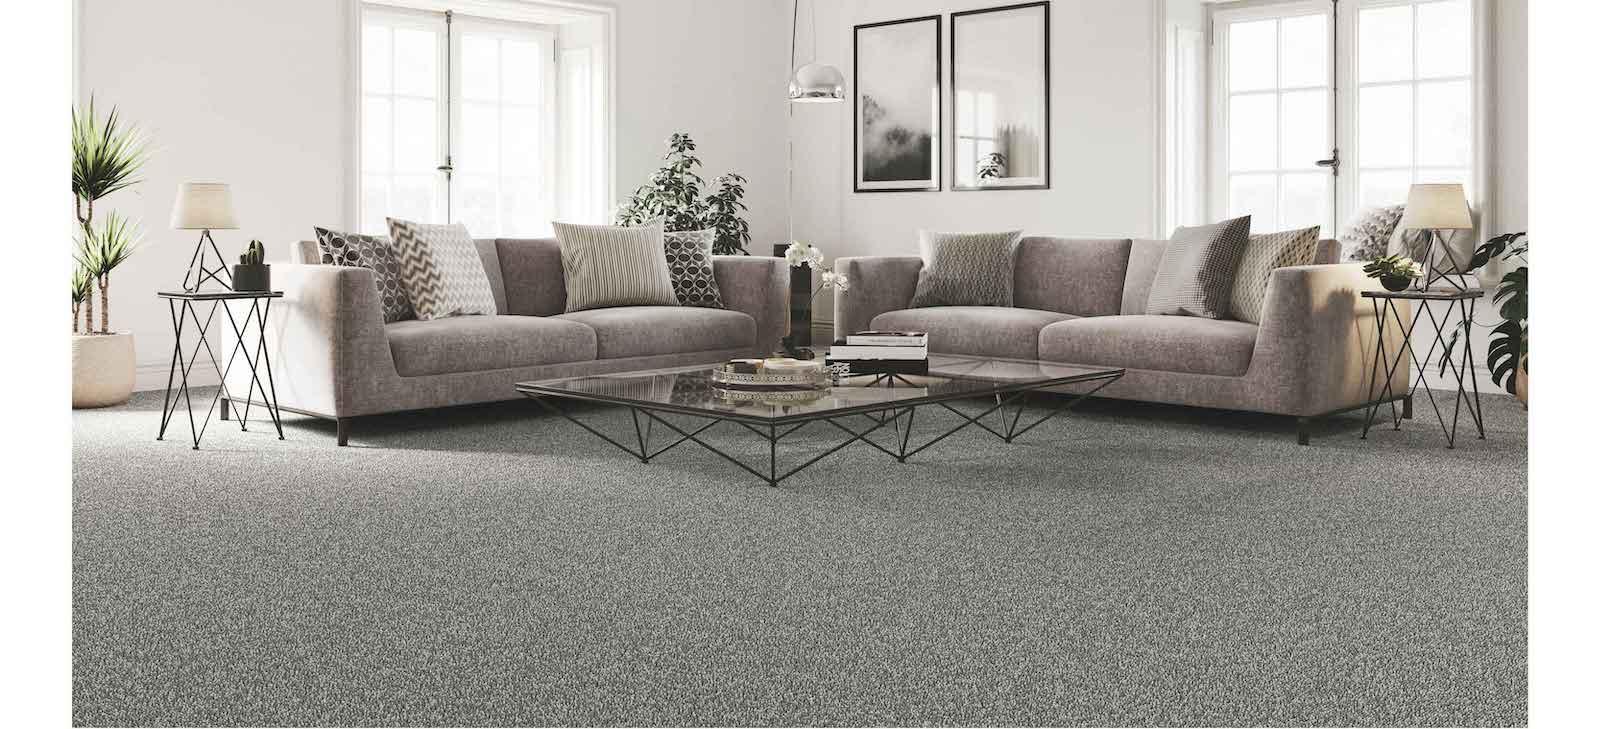 Spacious living room set with grey carpet